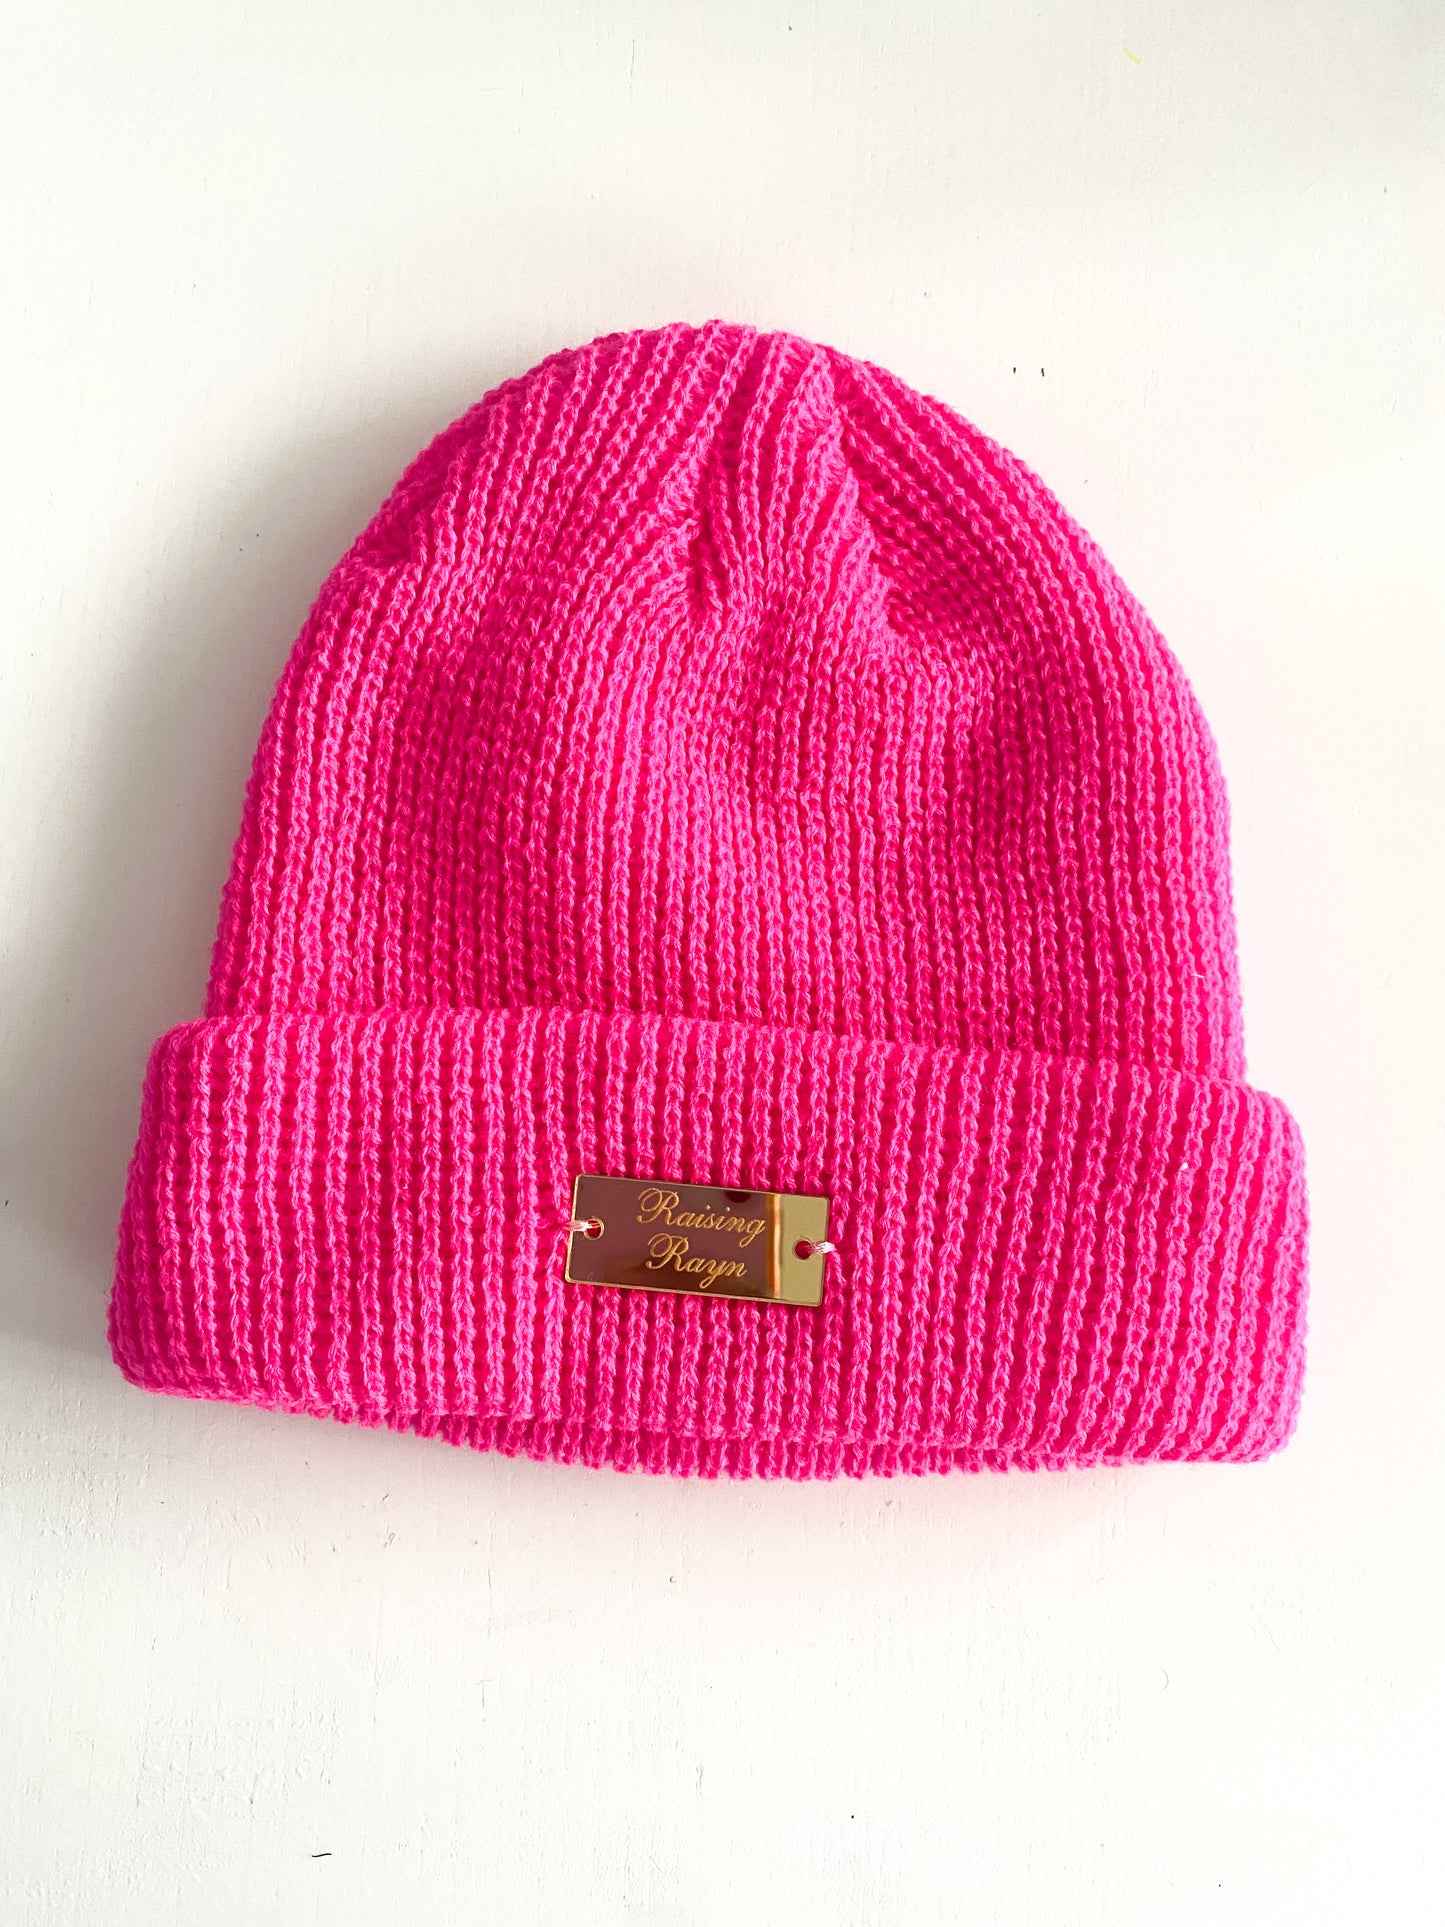 Hot pink Rust beanie hat